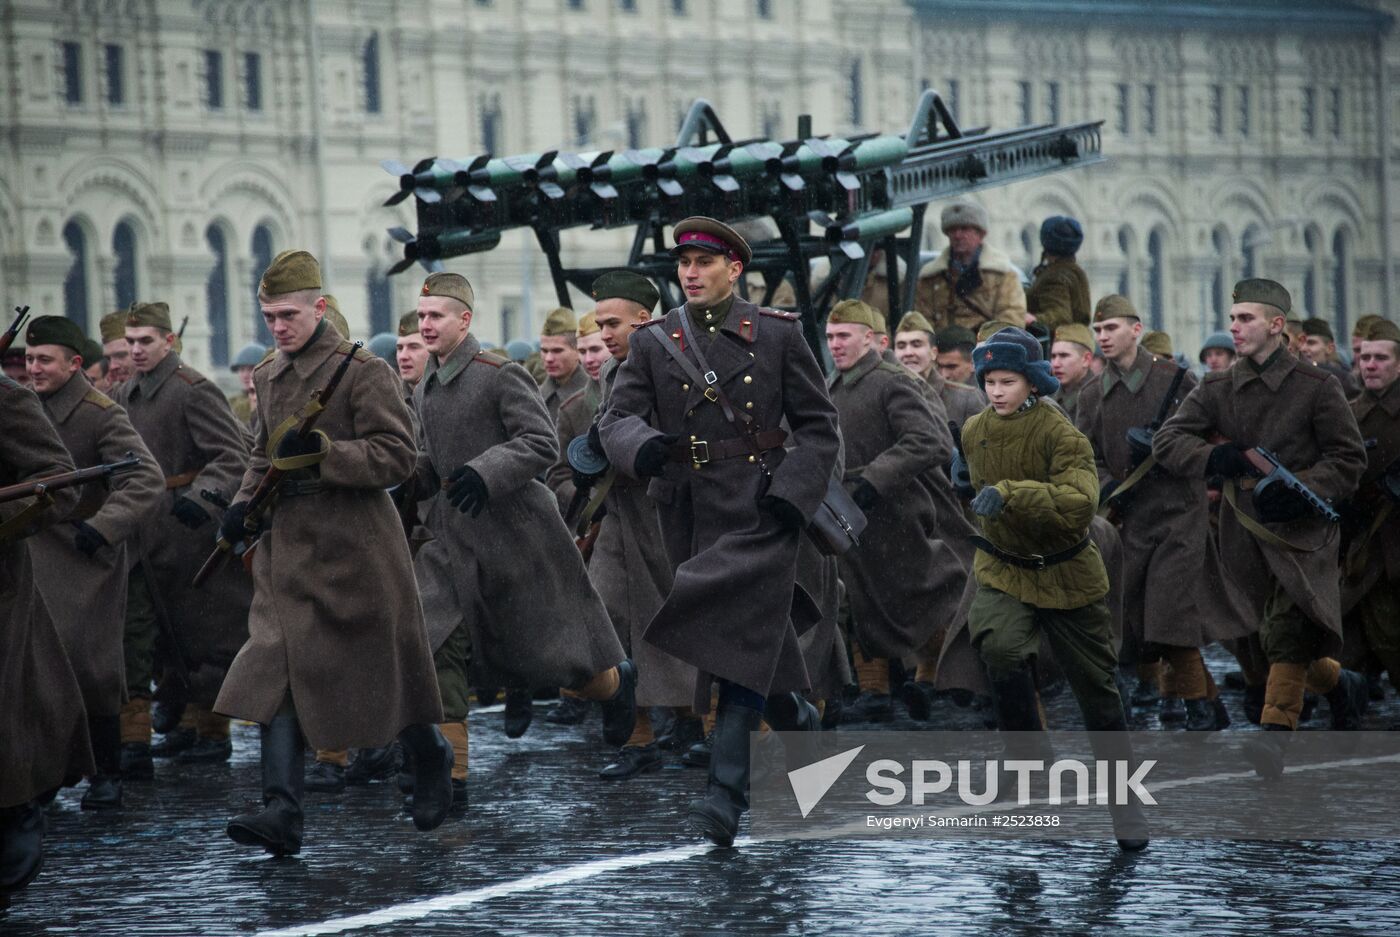 Anniversary march dedicated to November 7, 1941 military parade